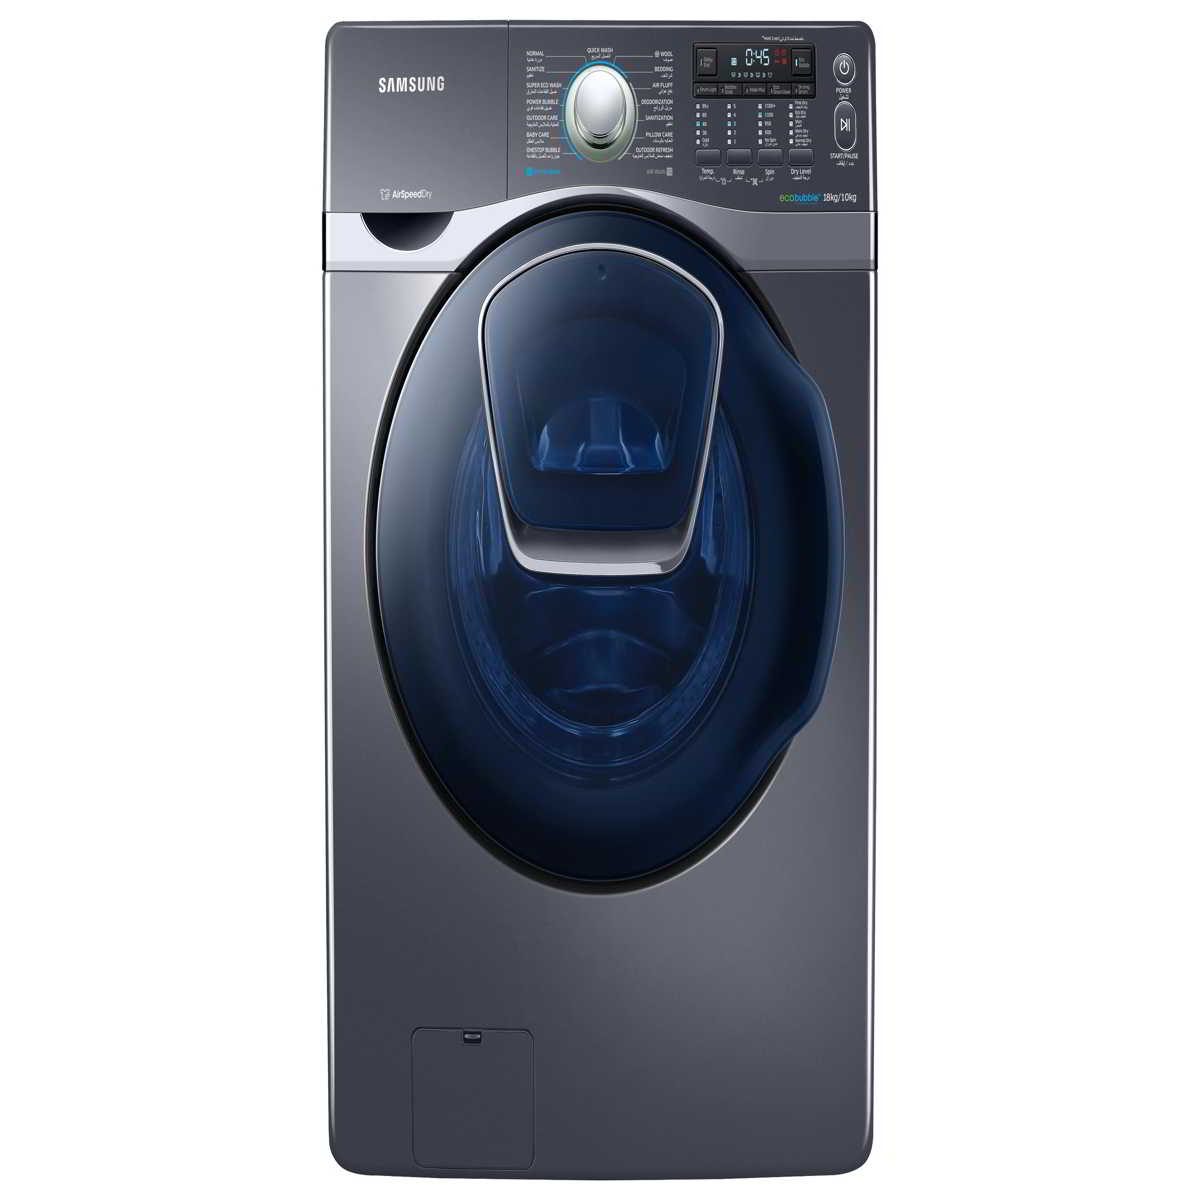 Samsung washing machine takes 3 hours to wash